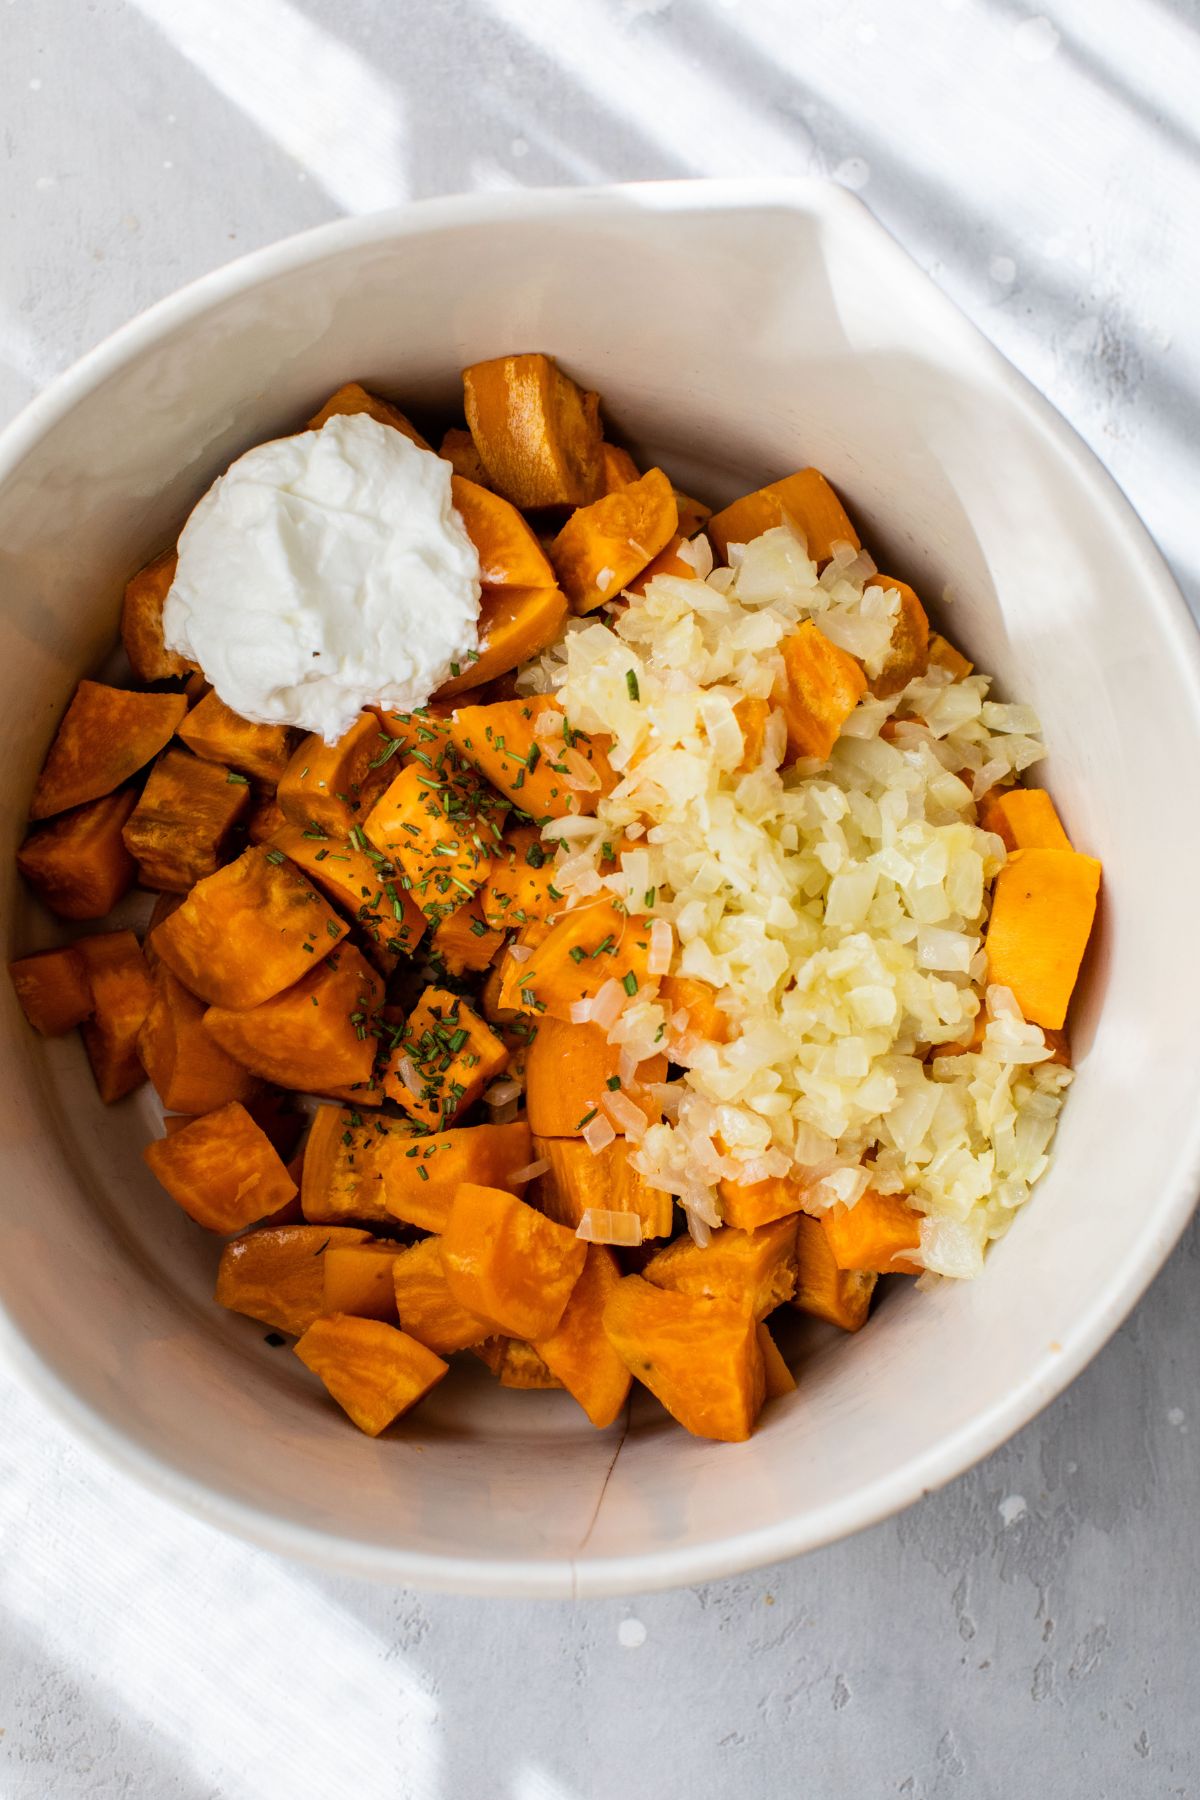 Cubed sweet potato, onion, greek yogurt and seasoning in a bowl.